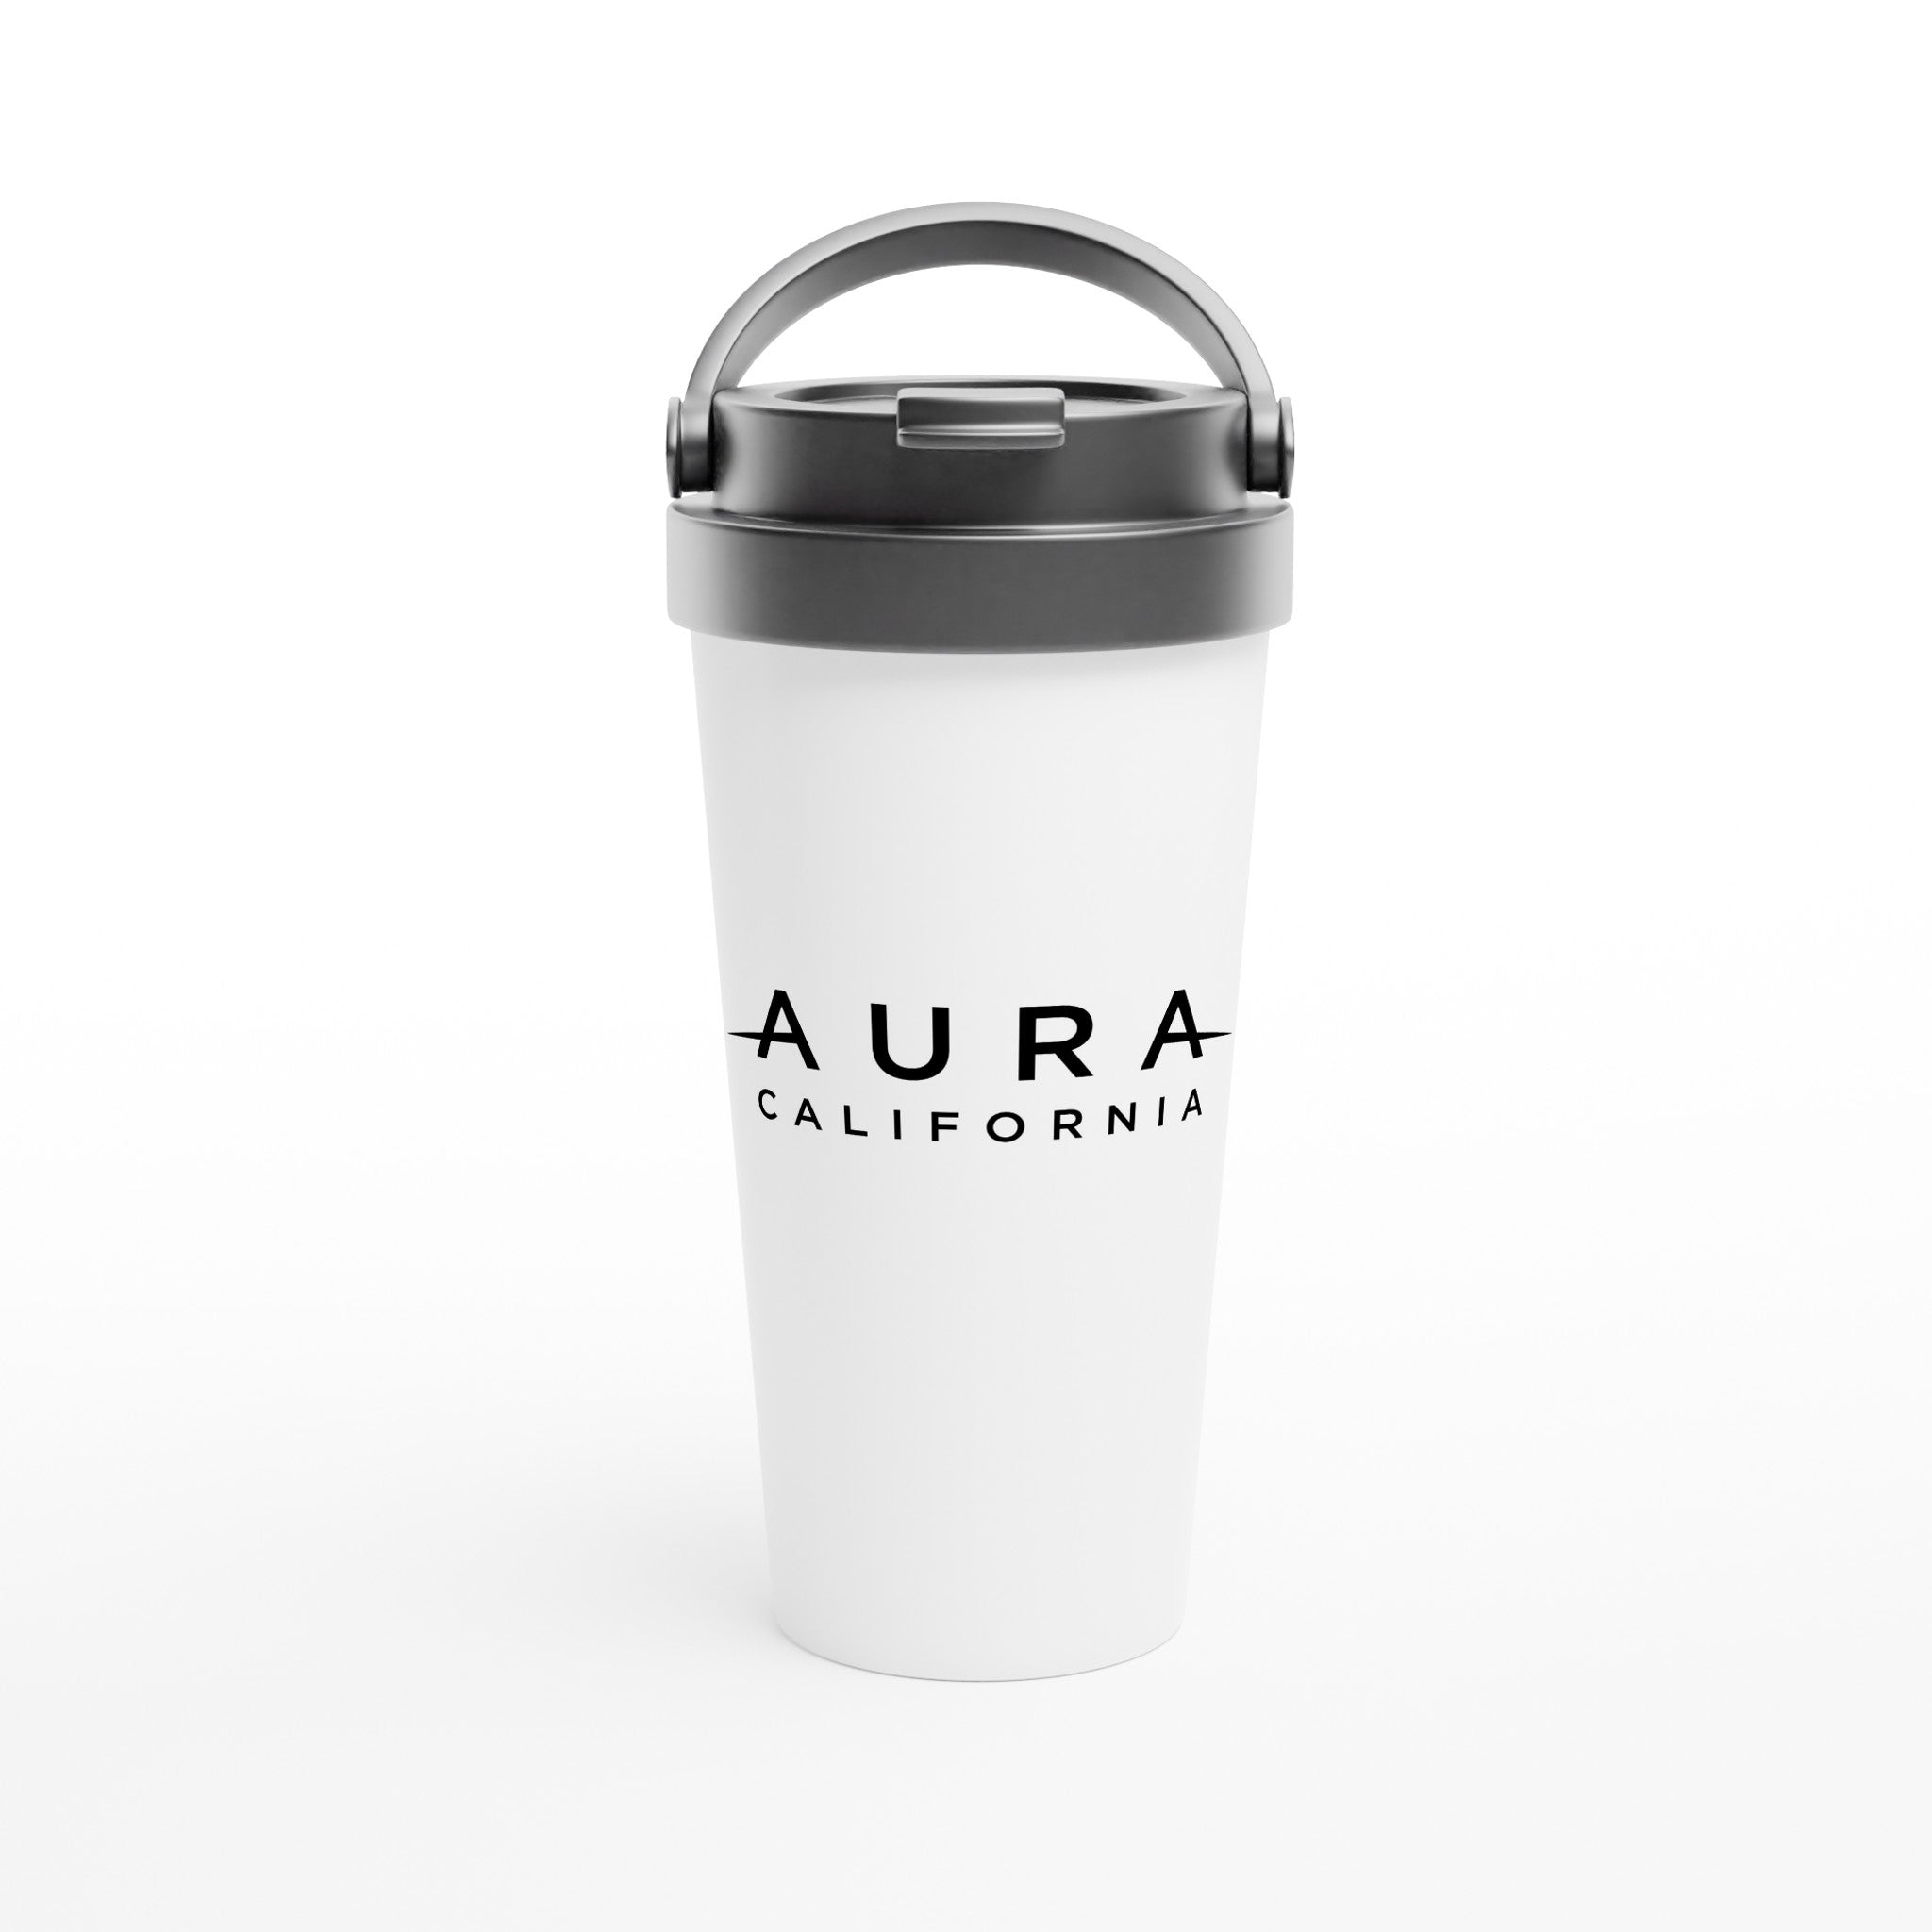 Aura California 15oz Stainless Steel Travel Mug